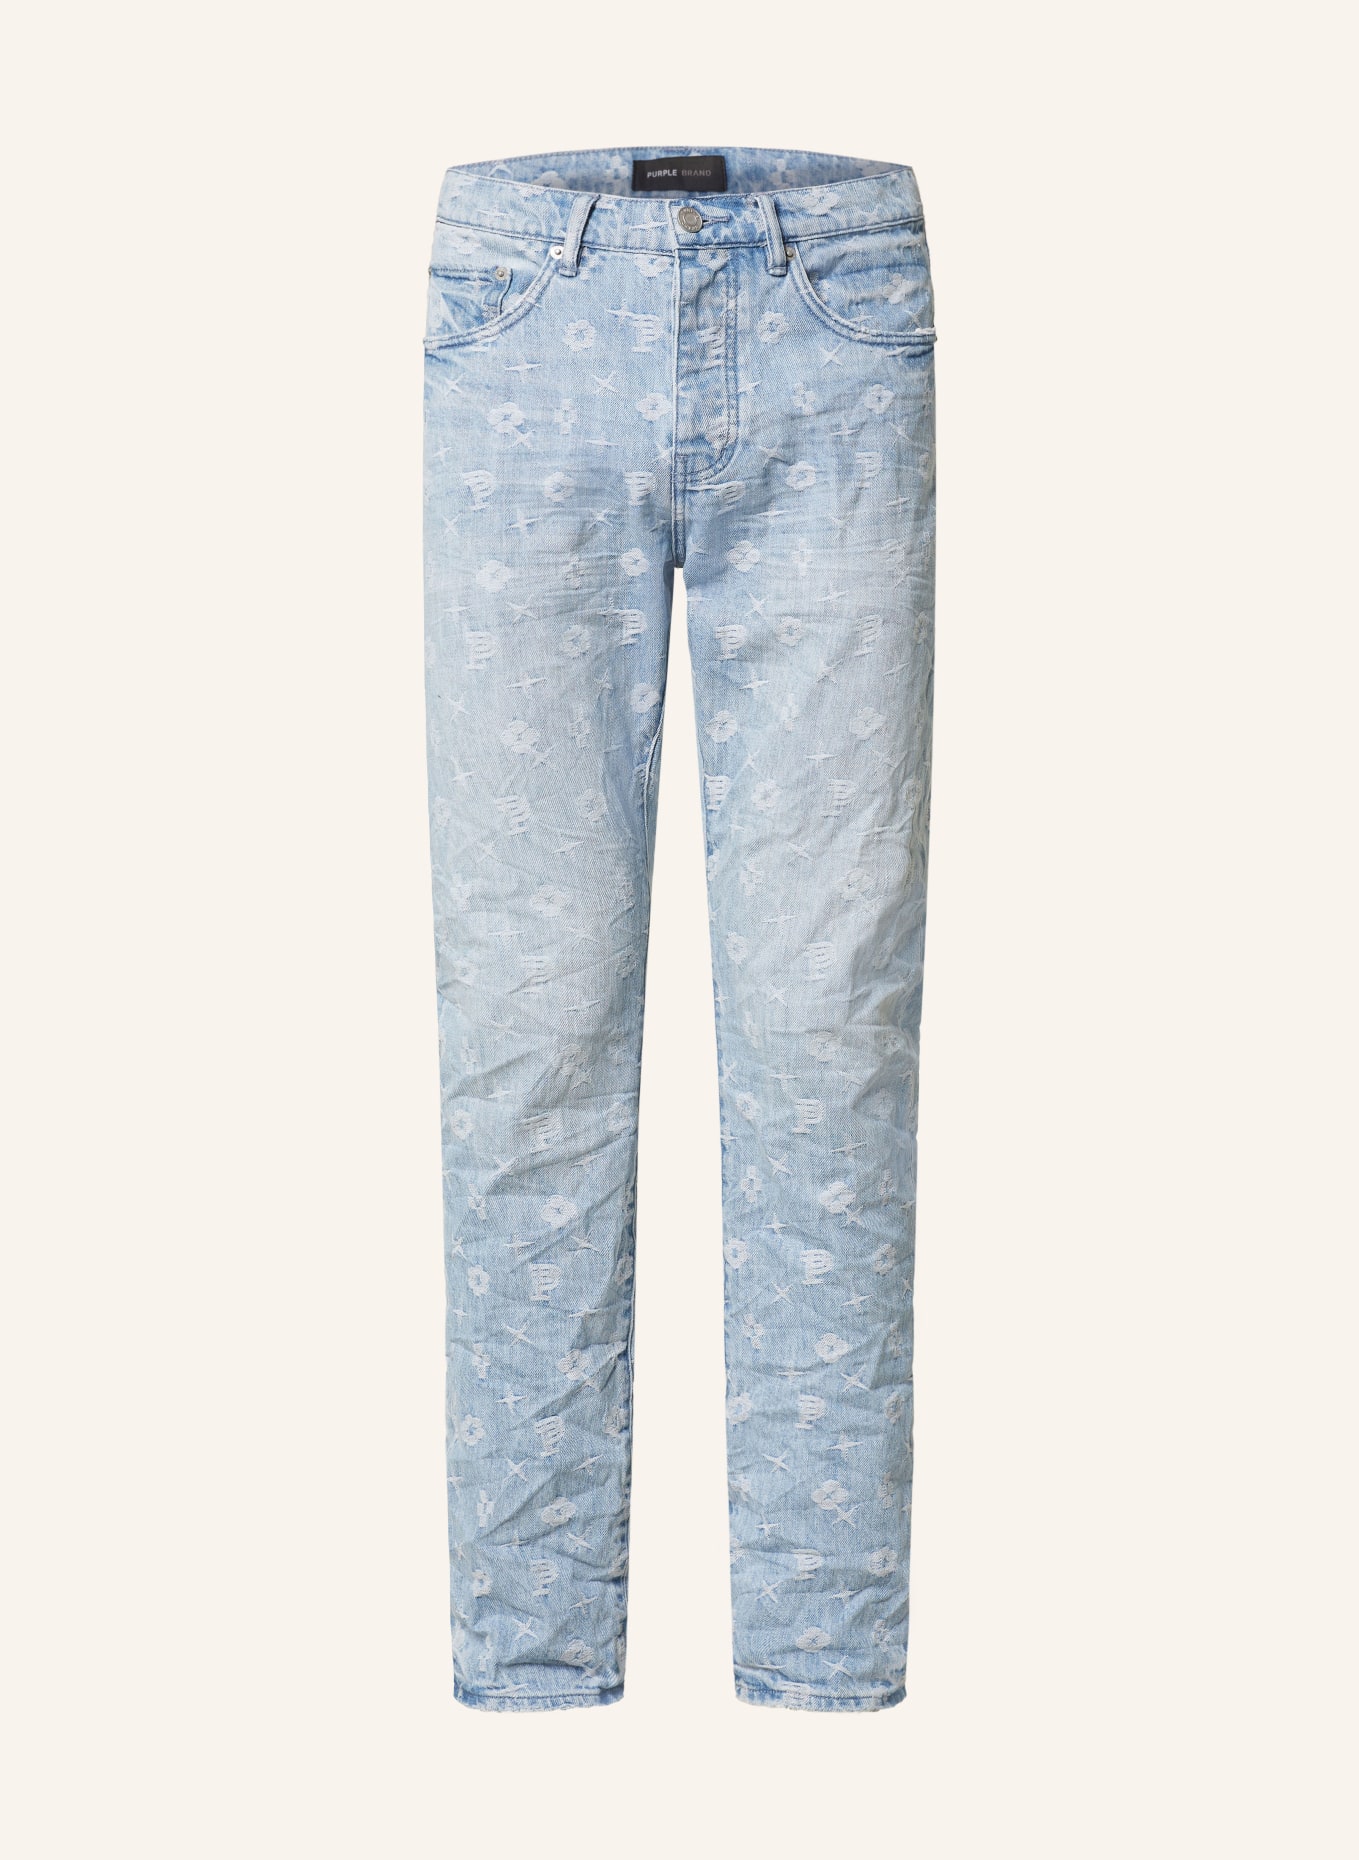 PURPLE BRAND Jeans Slim Fit, Farbe: LT INDIGO (Bild 1)